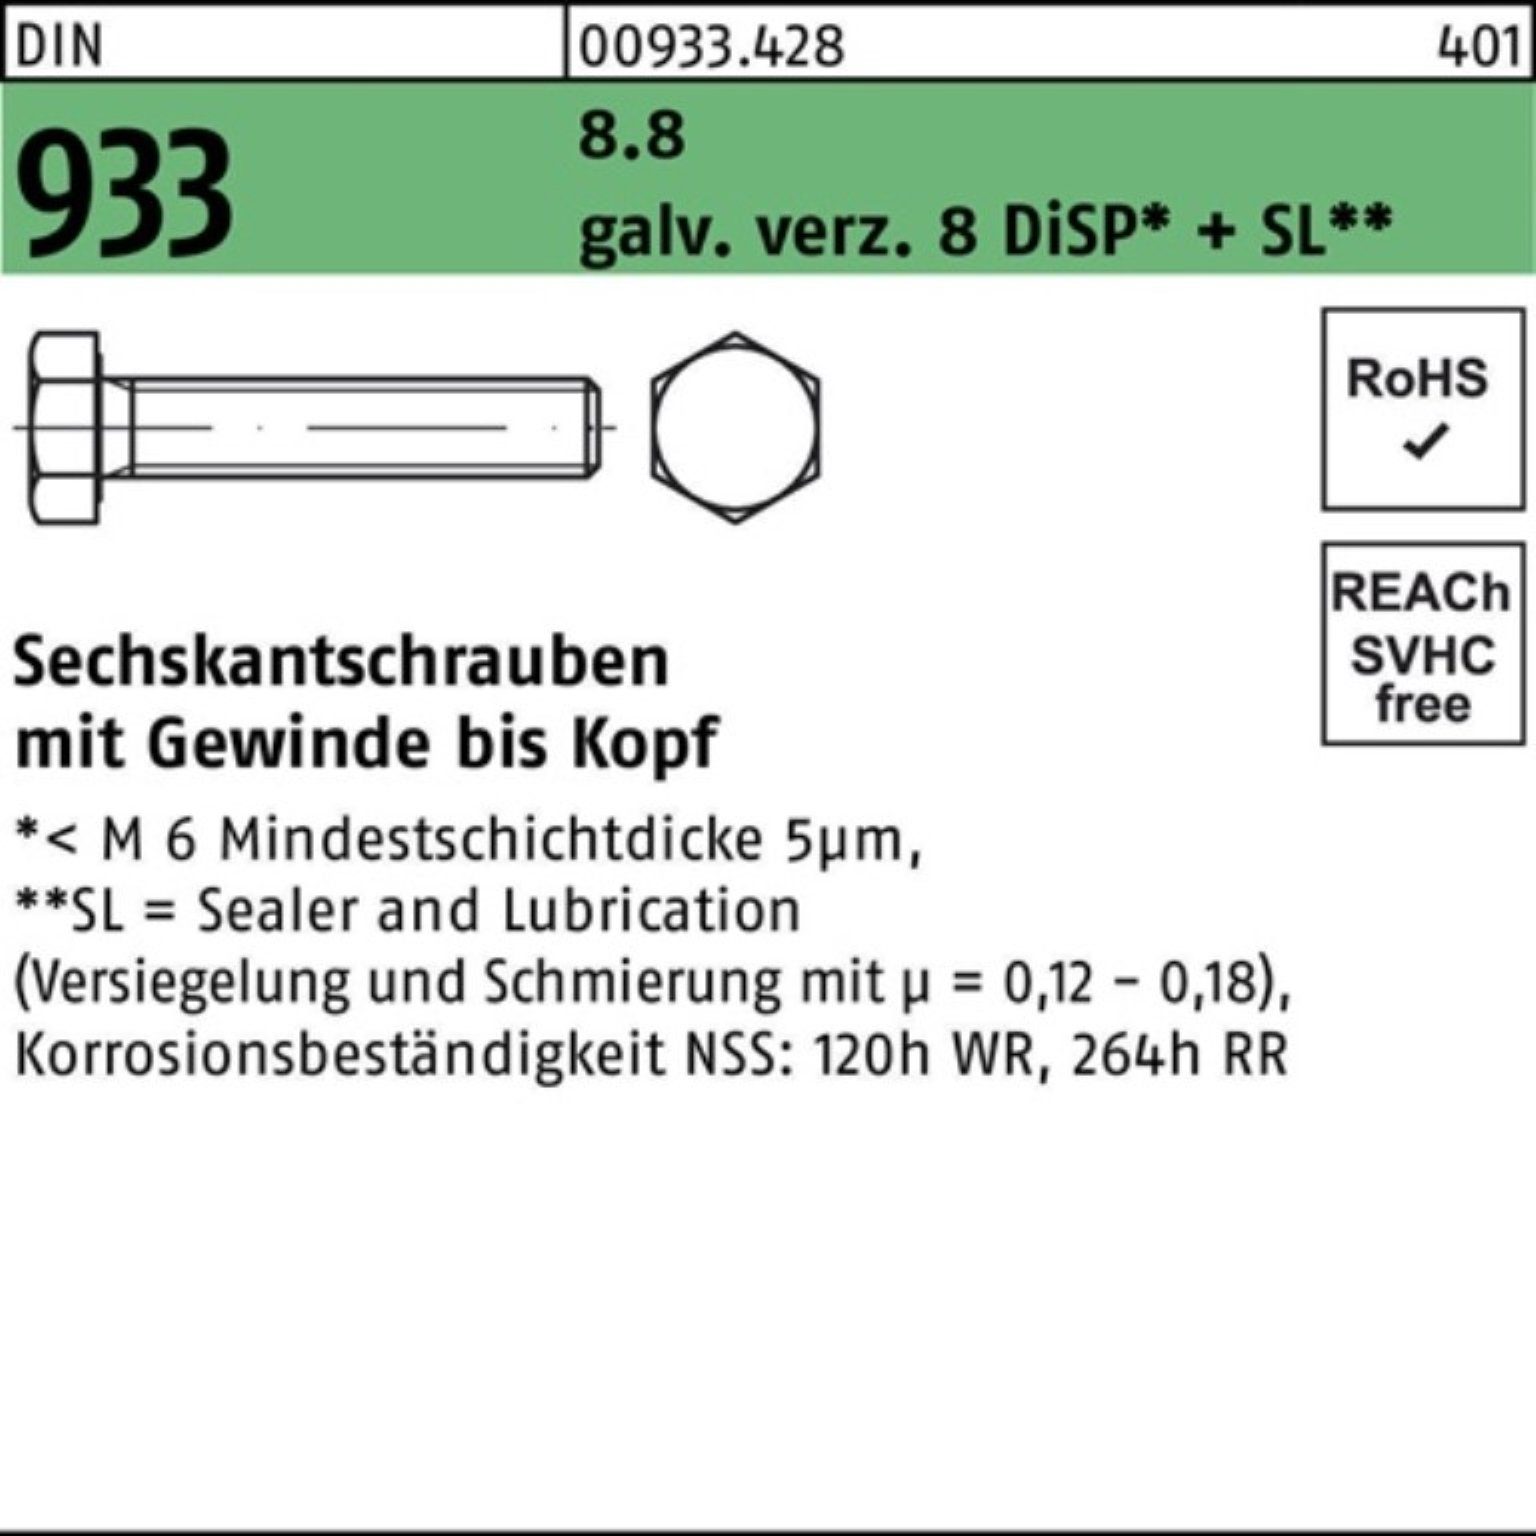 Reyher Sechskantschraube 100er Pack Sechskantschraube DIN 933 VG M24x 100 8.8 gal Zn 8 DiSP + S